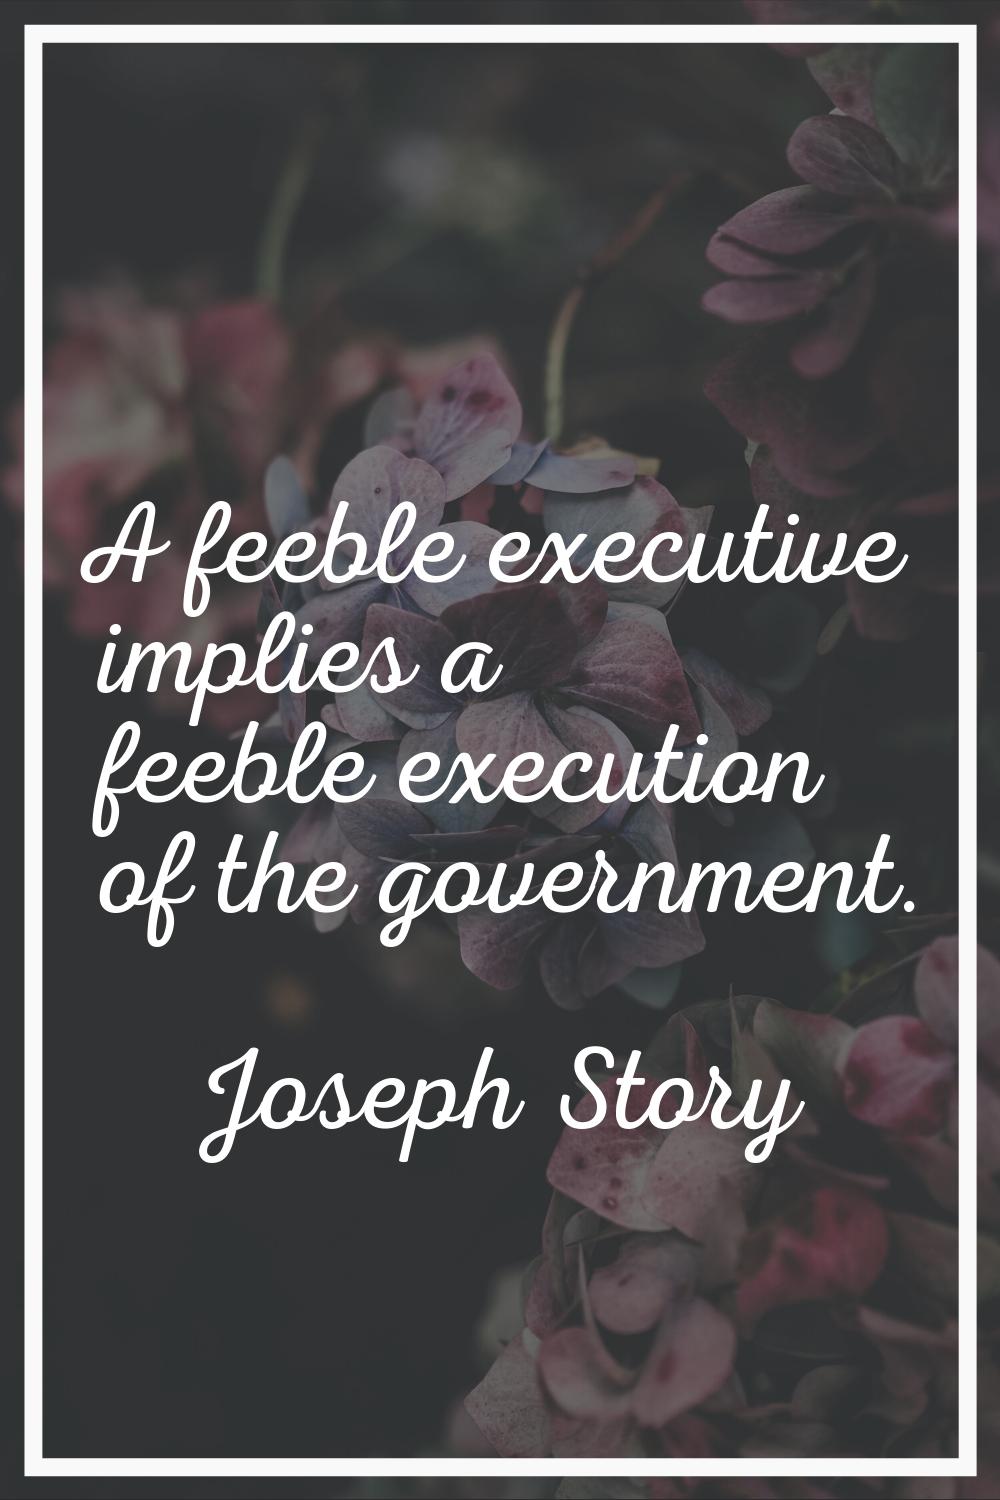 A feeble executive implies a feeble execution of the government.